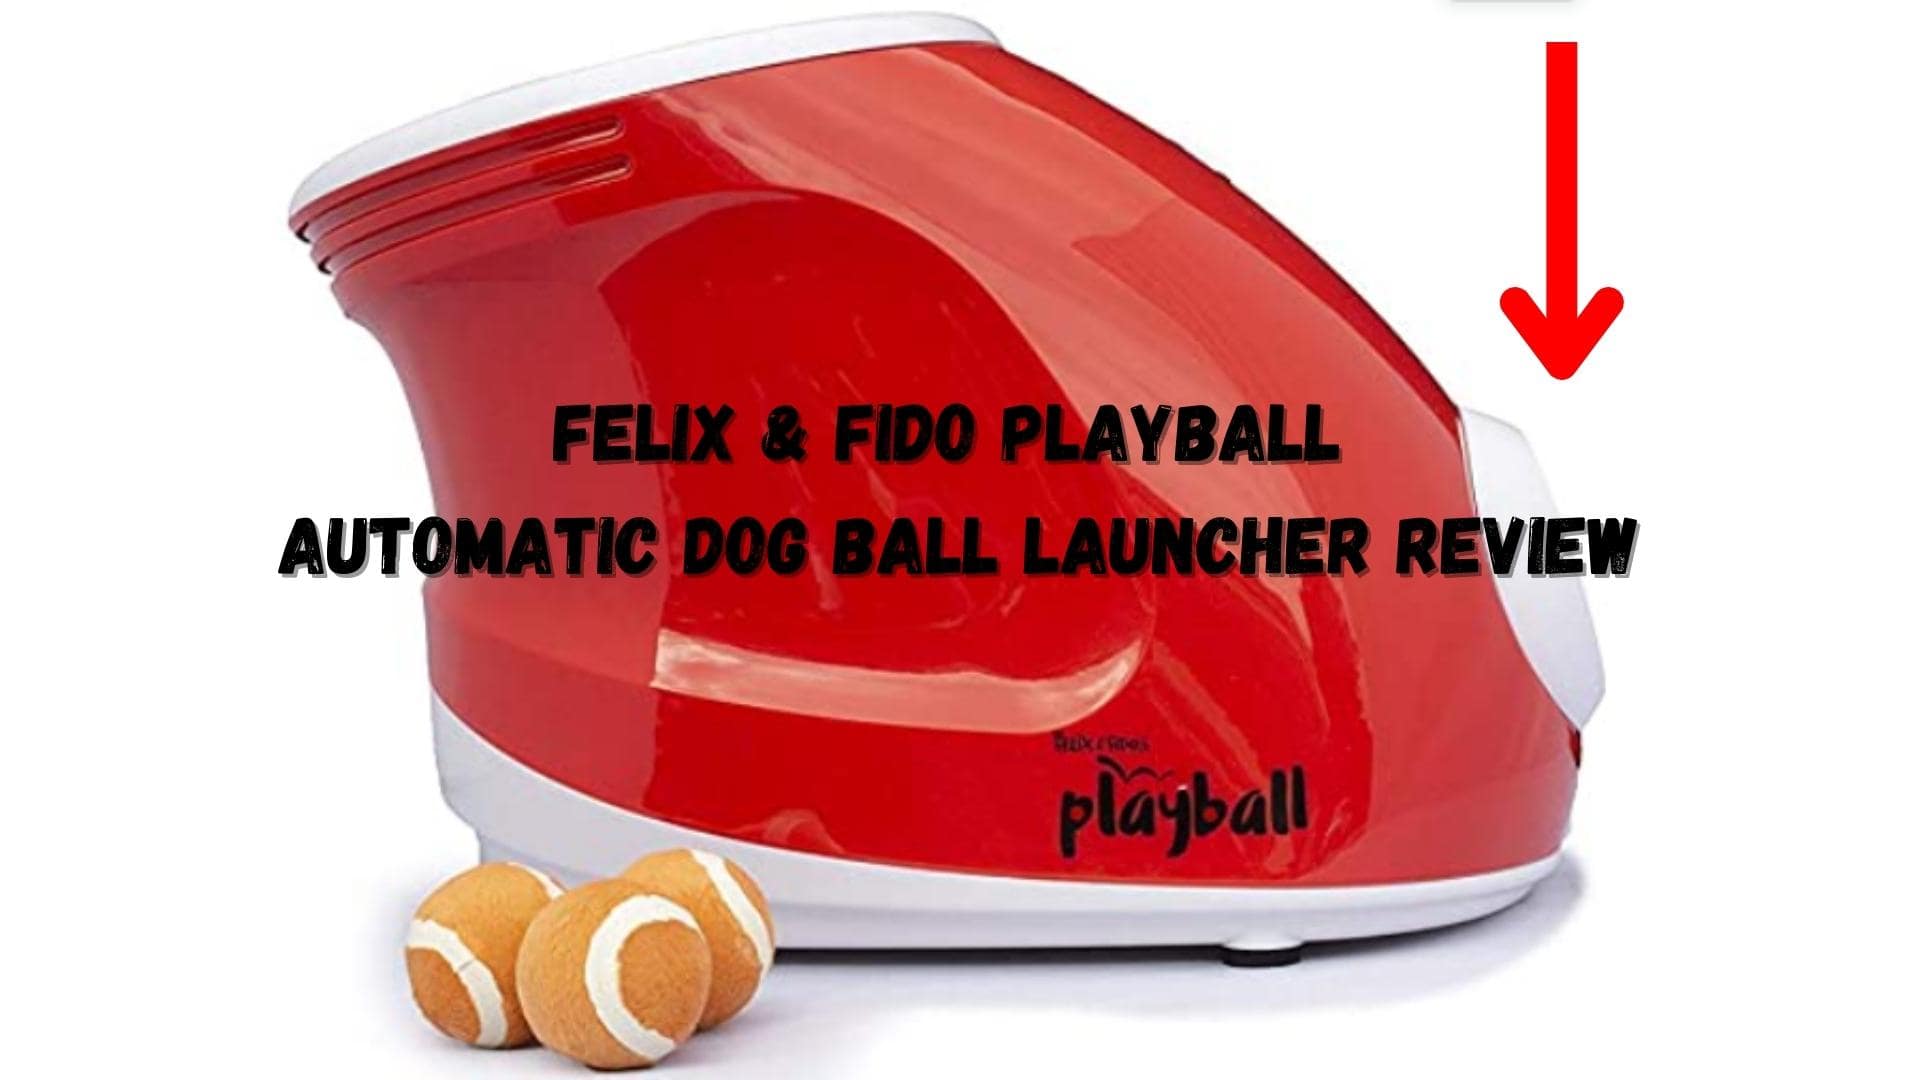 Felix & Fido Playball Automatic Dog Ball Launcher Review